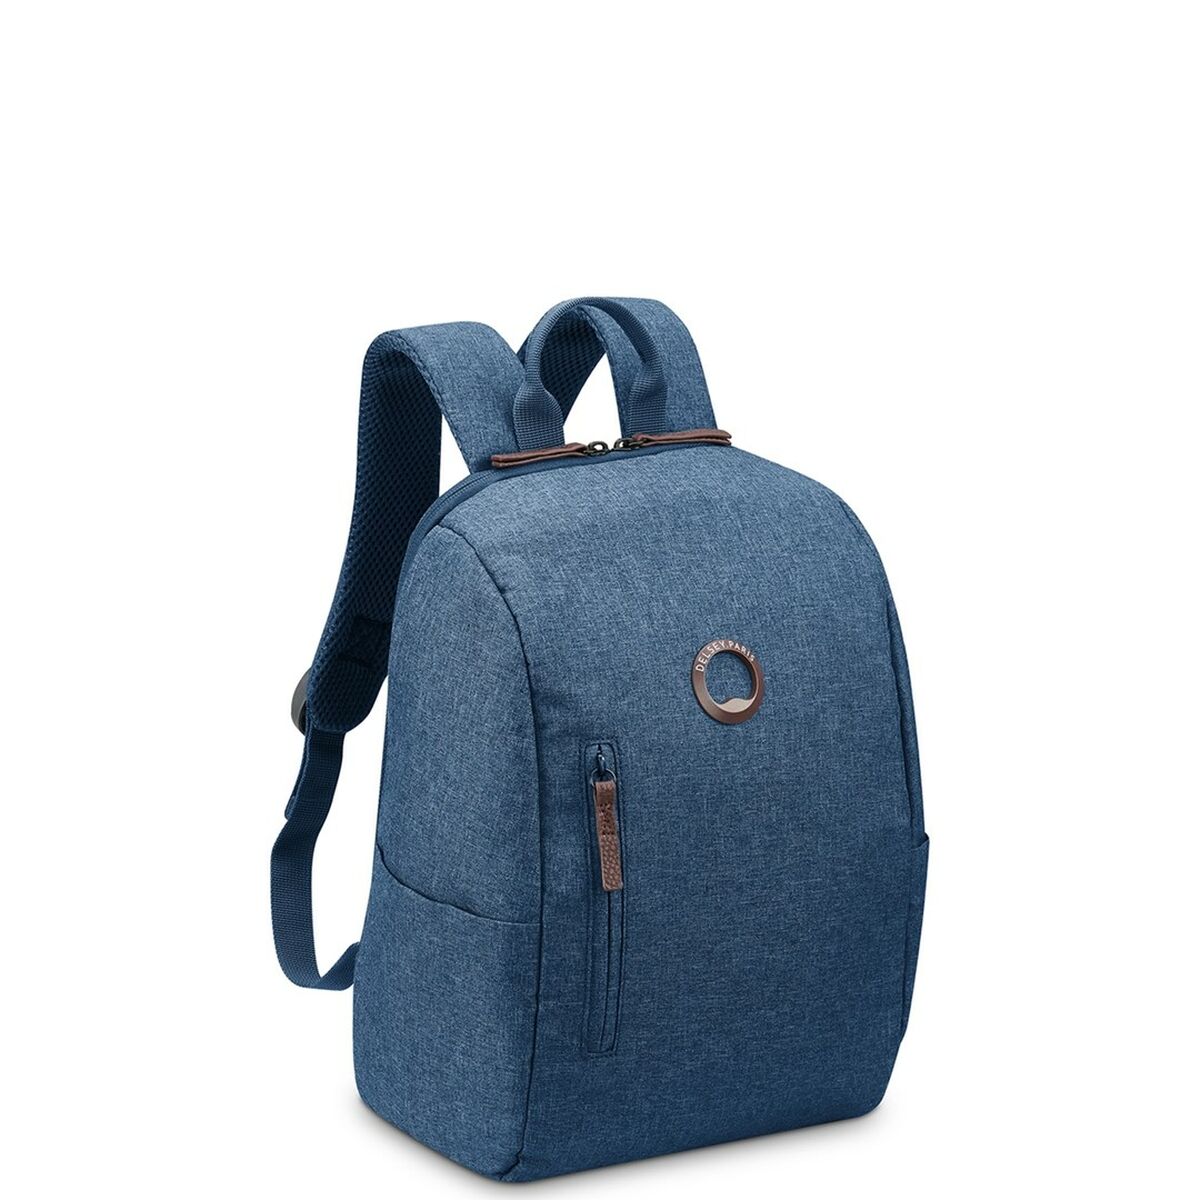 Laptop Backpack Delsey Maubert 2.0 Blue 23 x 32,5 x 14,5 cm